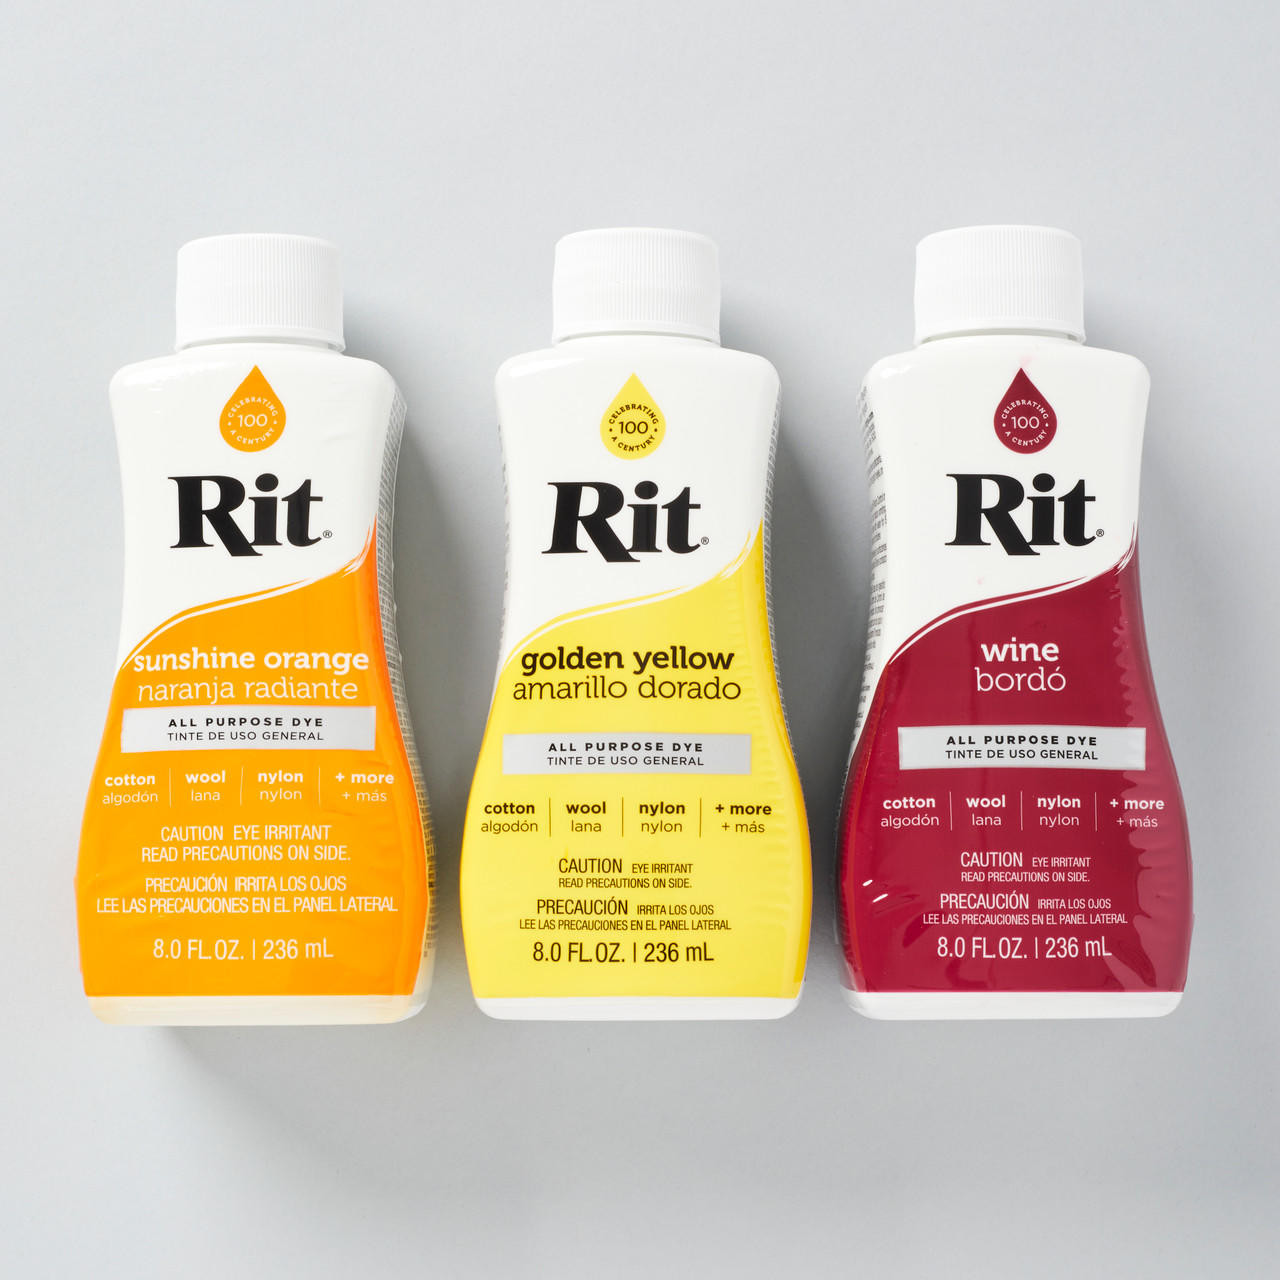 Rit® All Purpose Liquid Dye